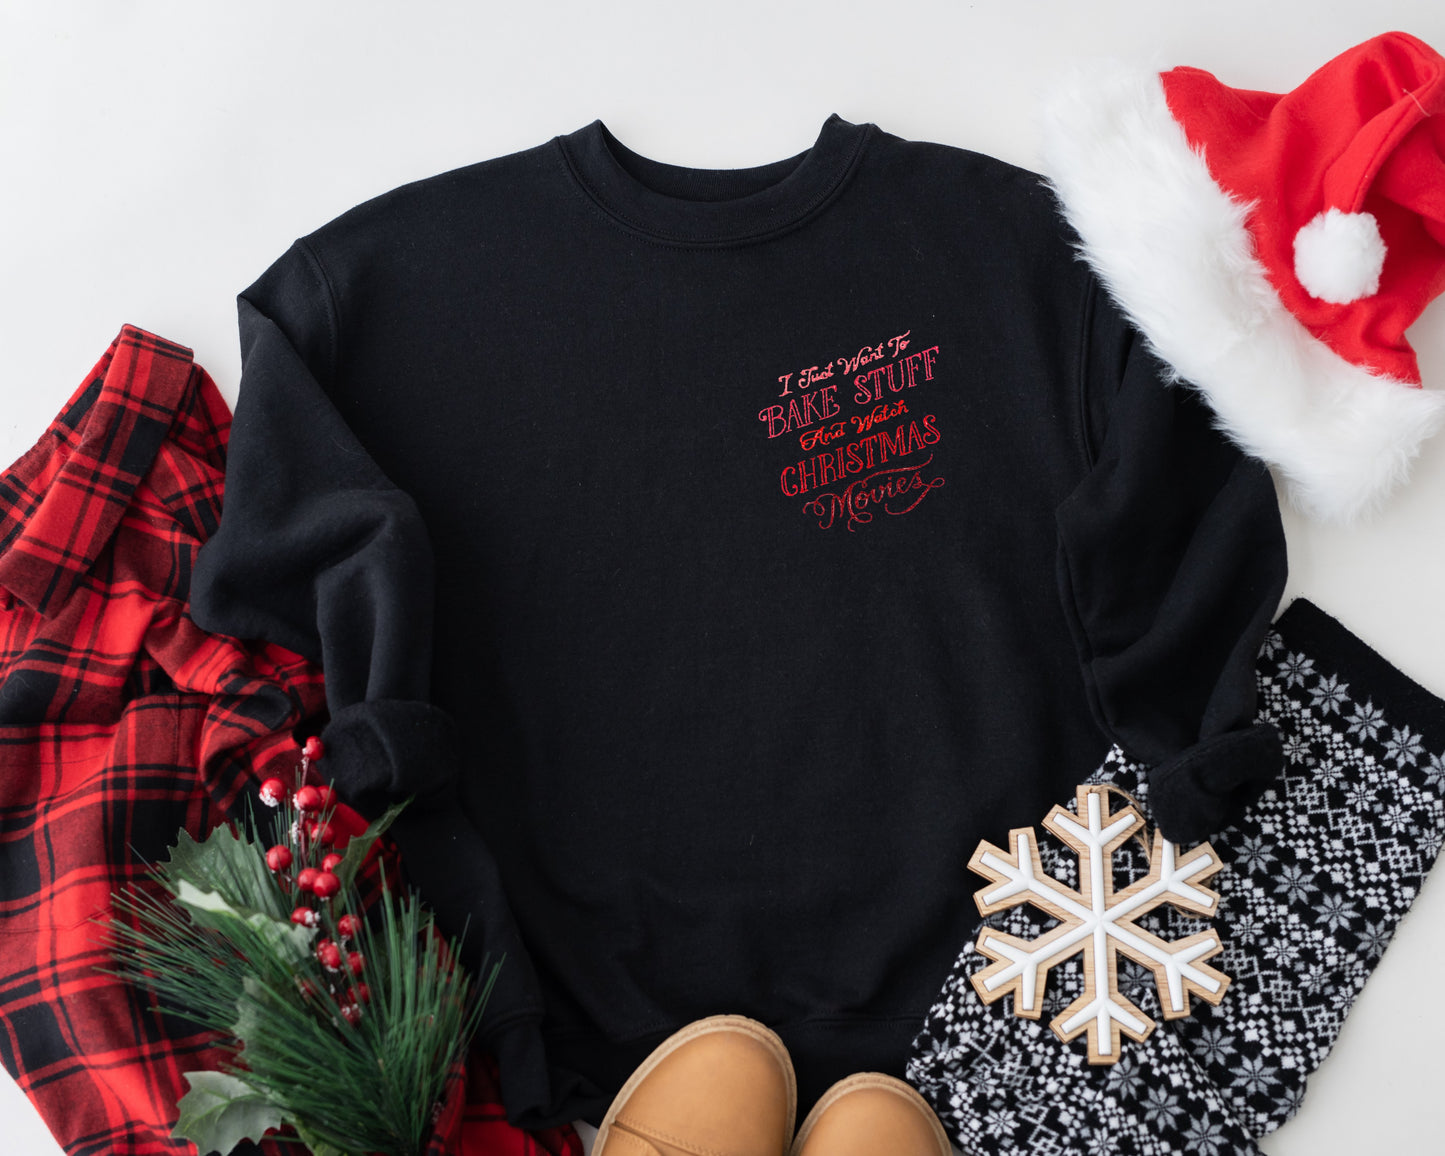 Bake Stuff and Watch Christmas Movies Embroidered Adult Unisex Crewneck Sweatshirt